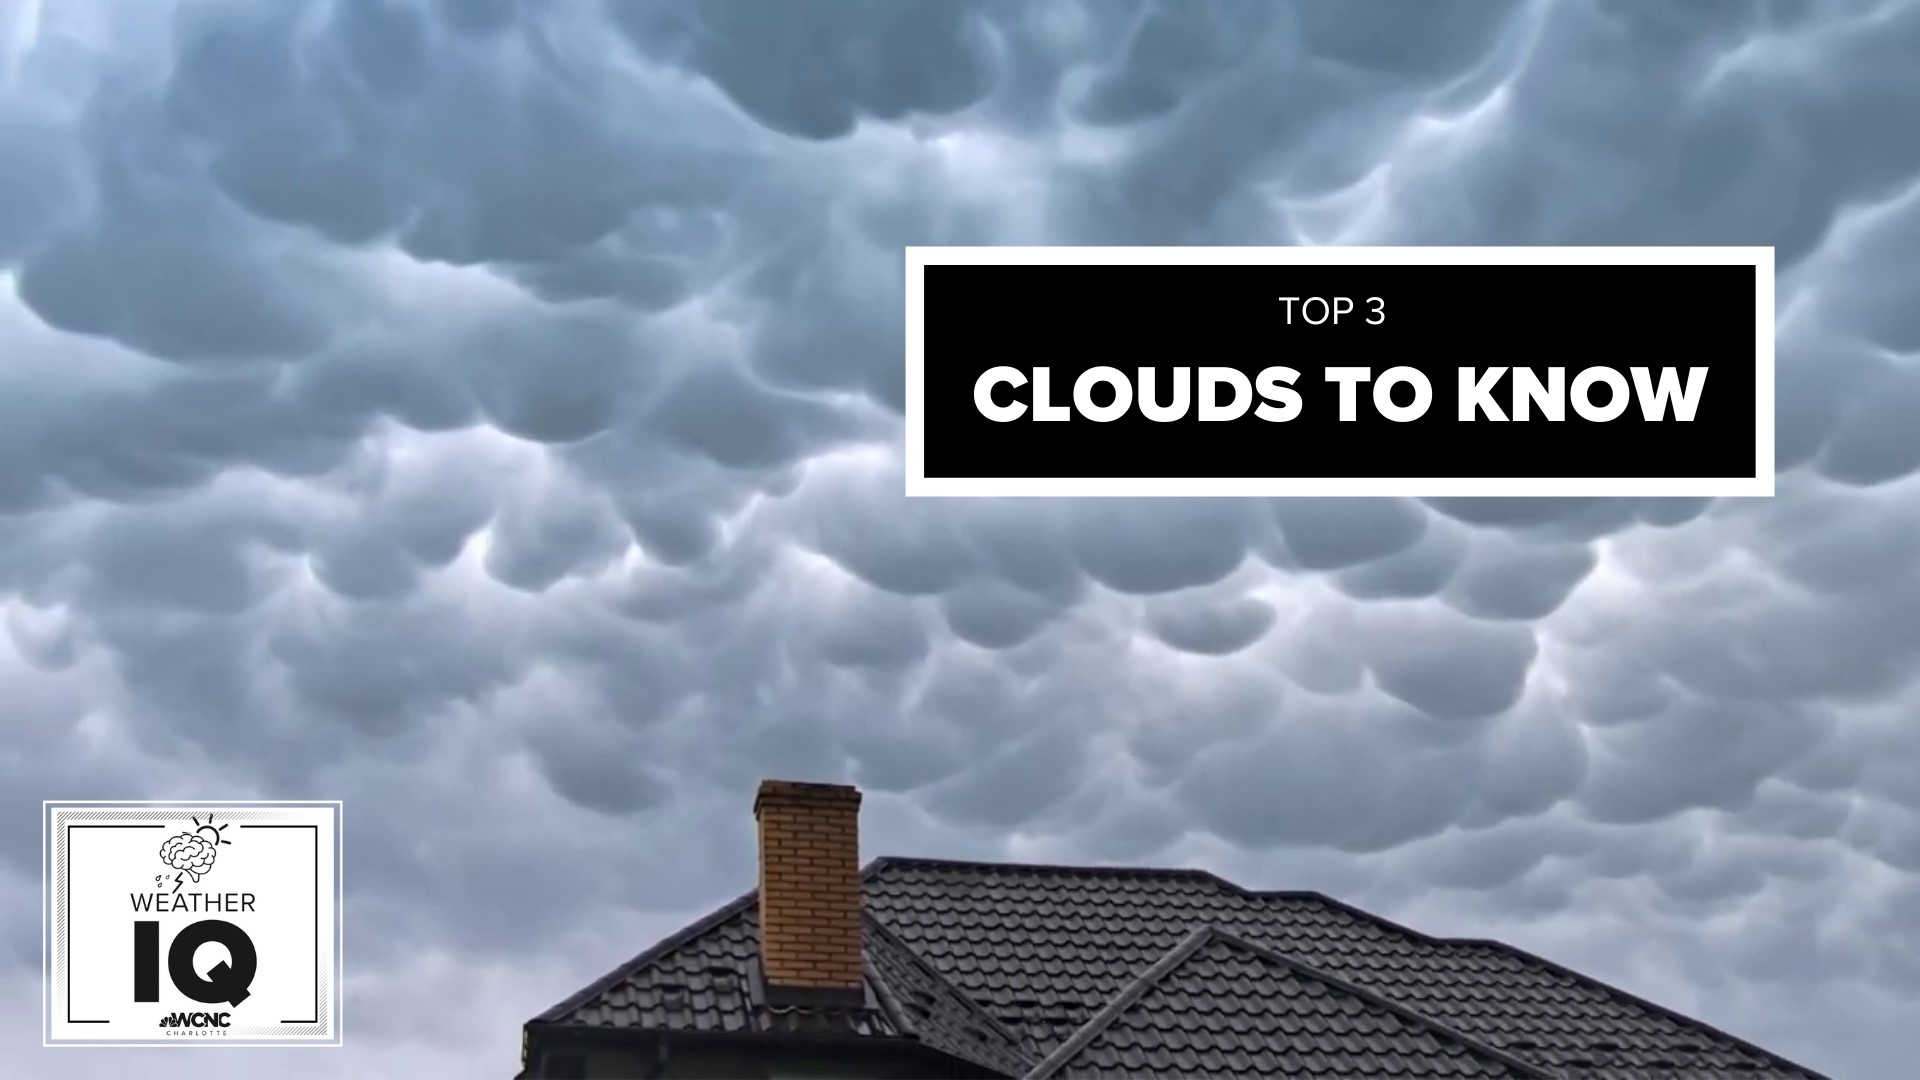 funnel cloud vs tornado